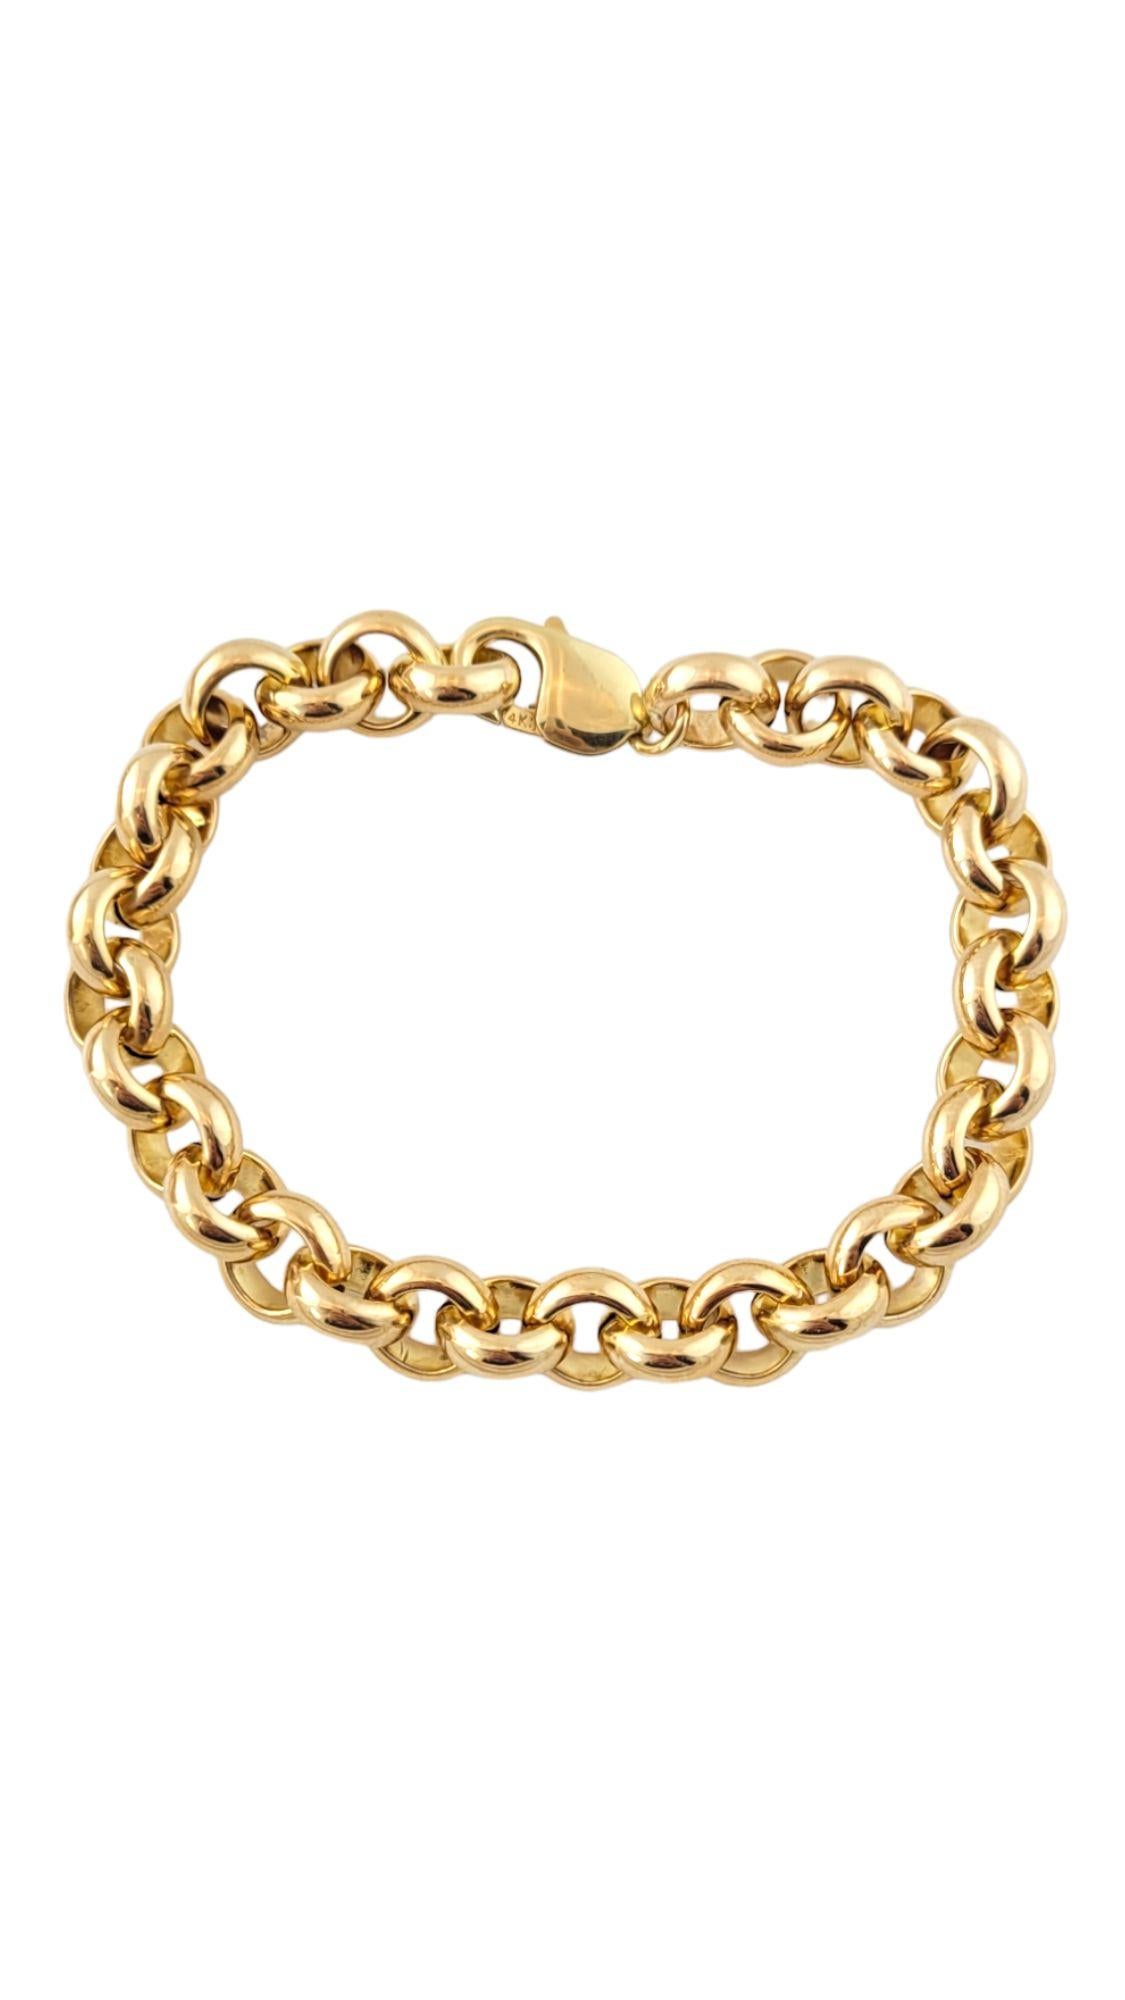 Gorgeous 14K gold bracelet with hollow interlocking links!

Size: 7